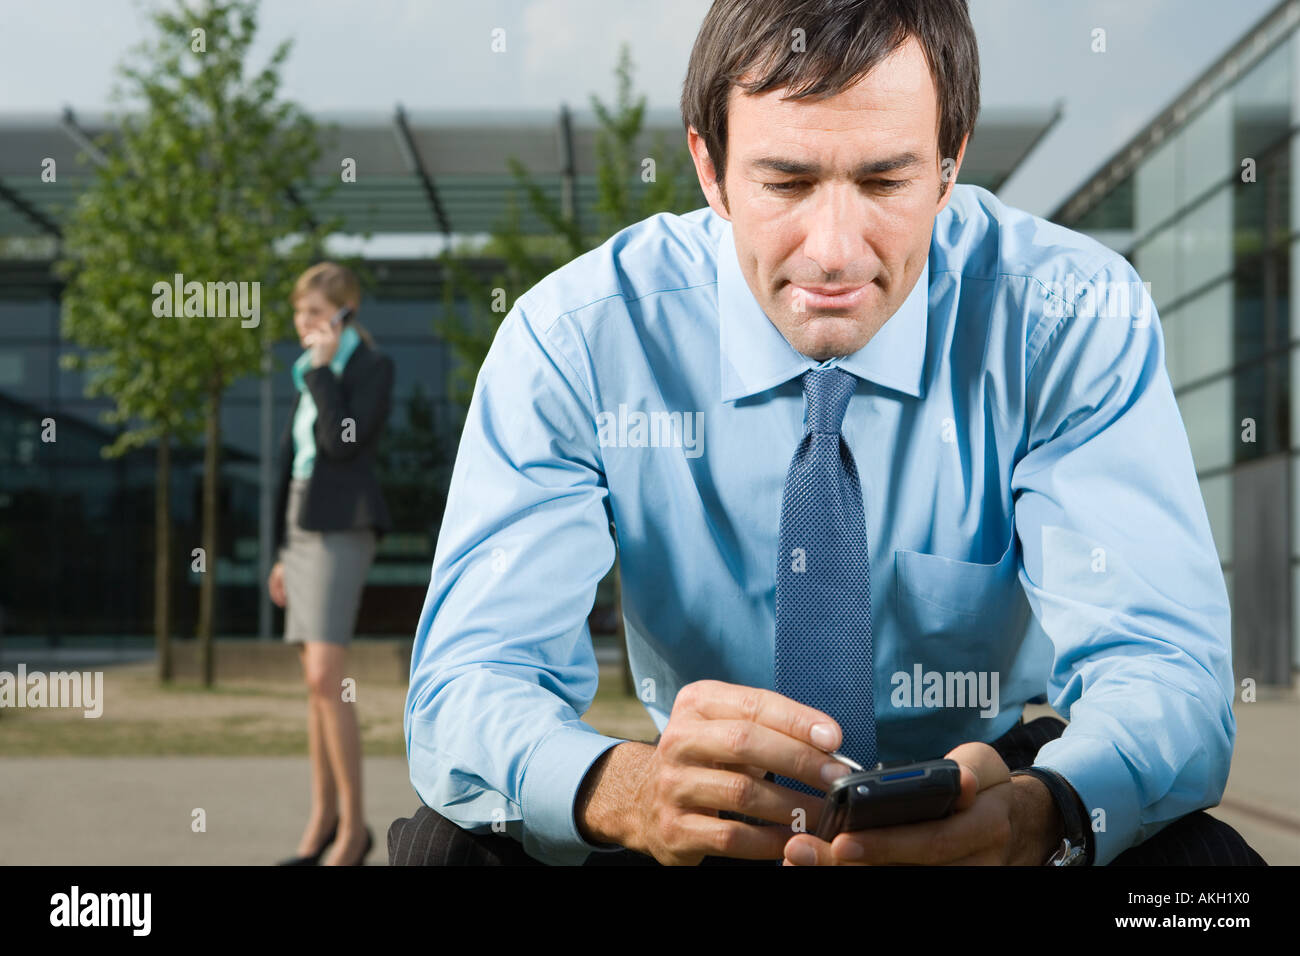 Man using handheld computer outdoors Stock Photo